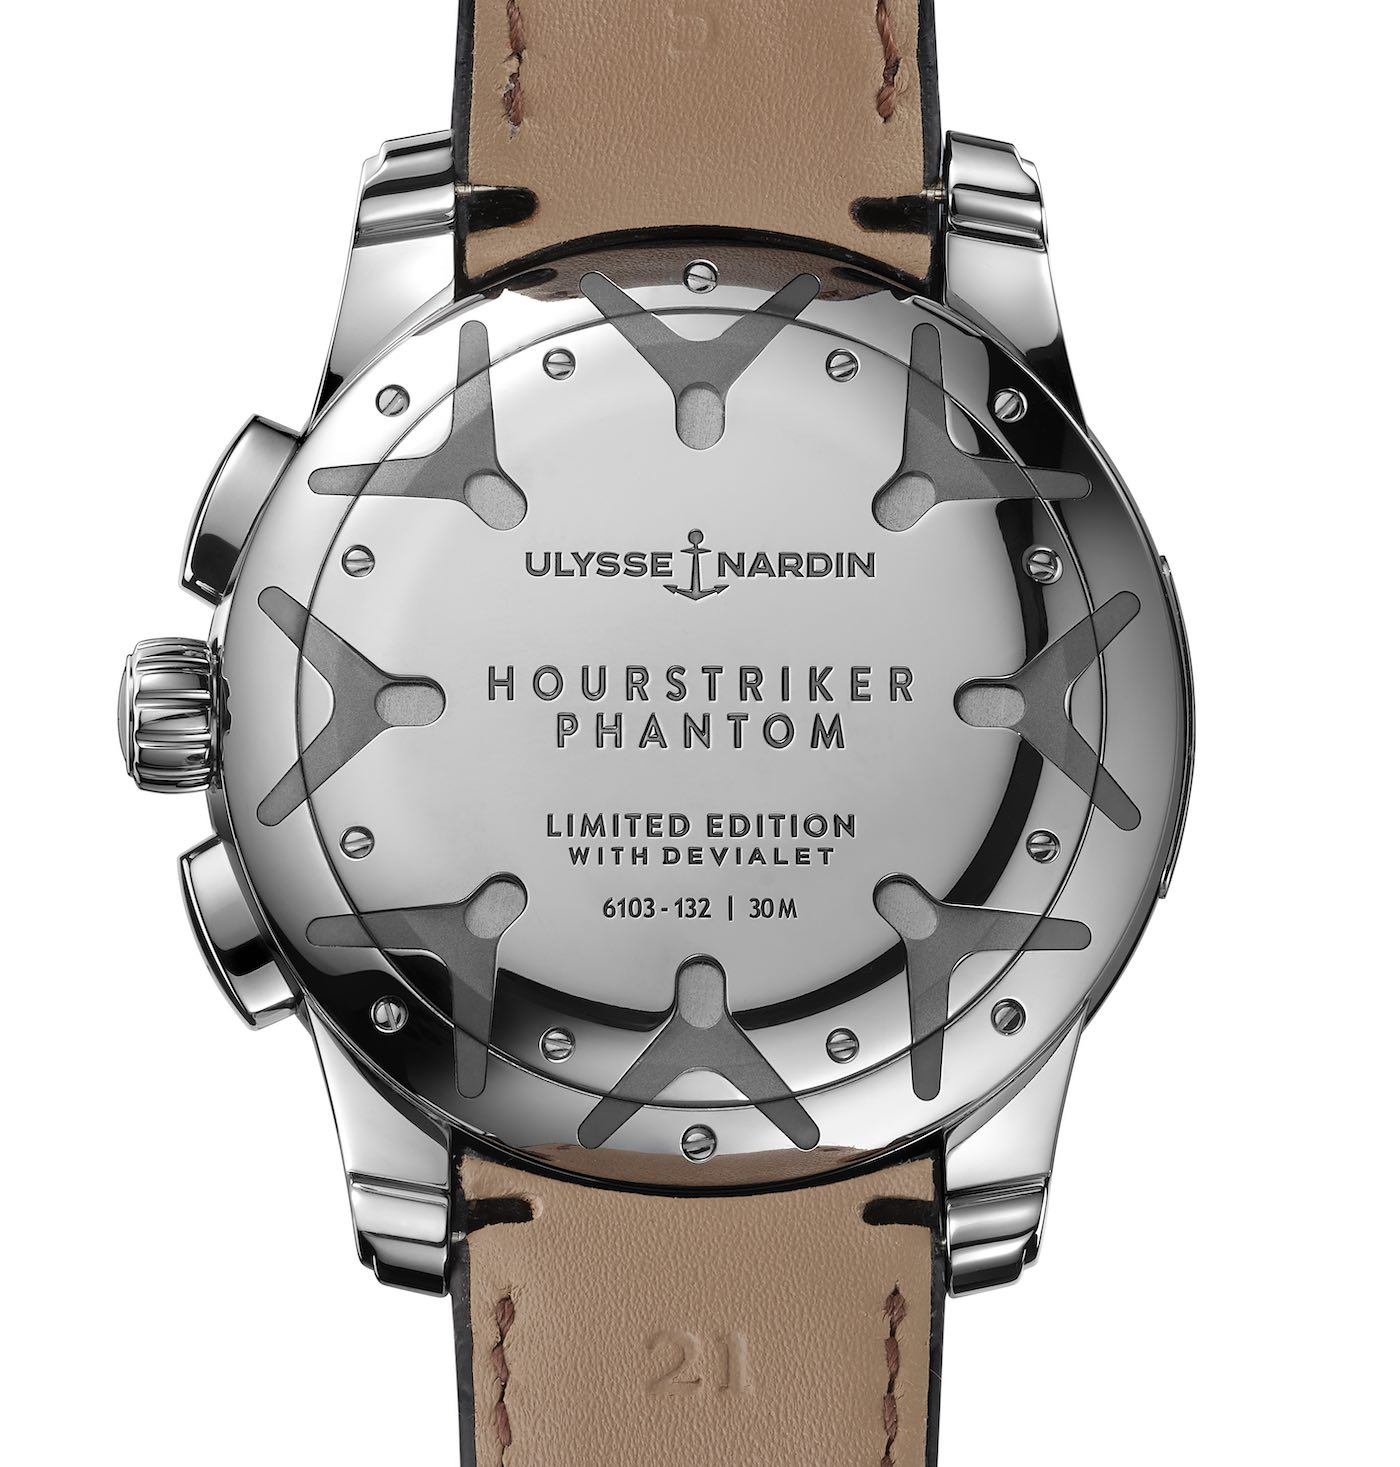 Ulysse-Nardin-Hourstriker-Phantom-Limited-Edition-Watch-Devialet